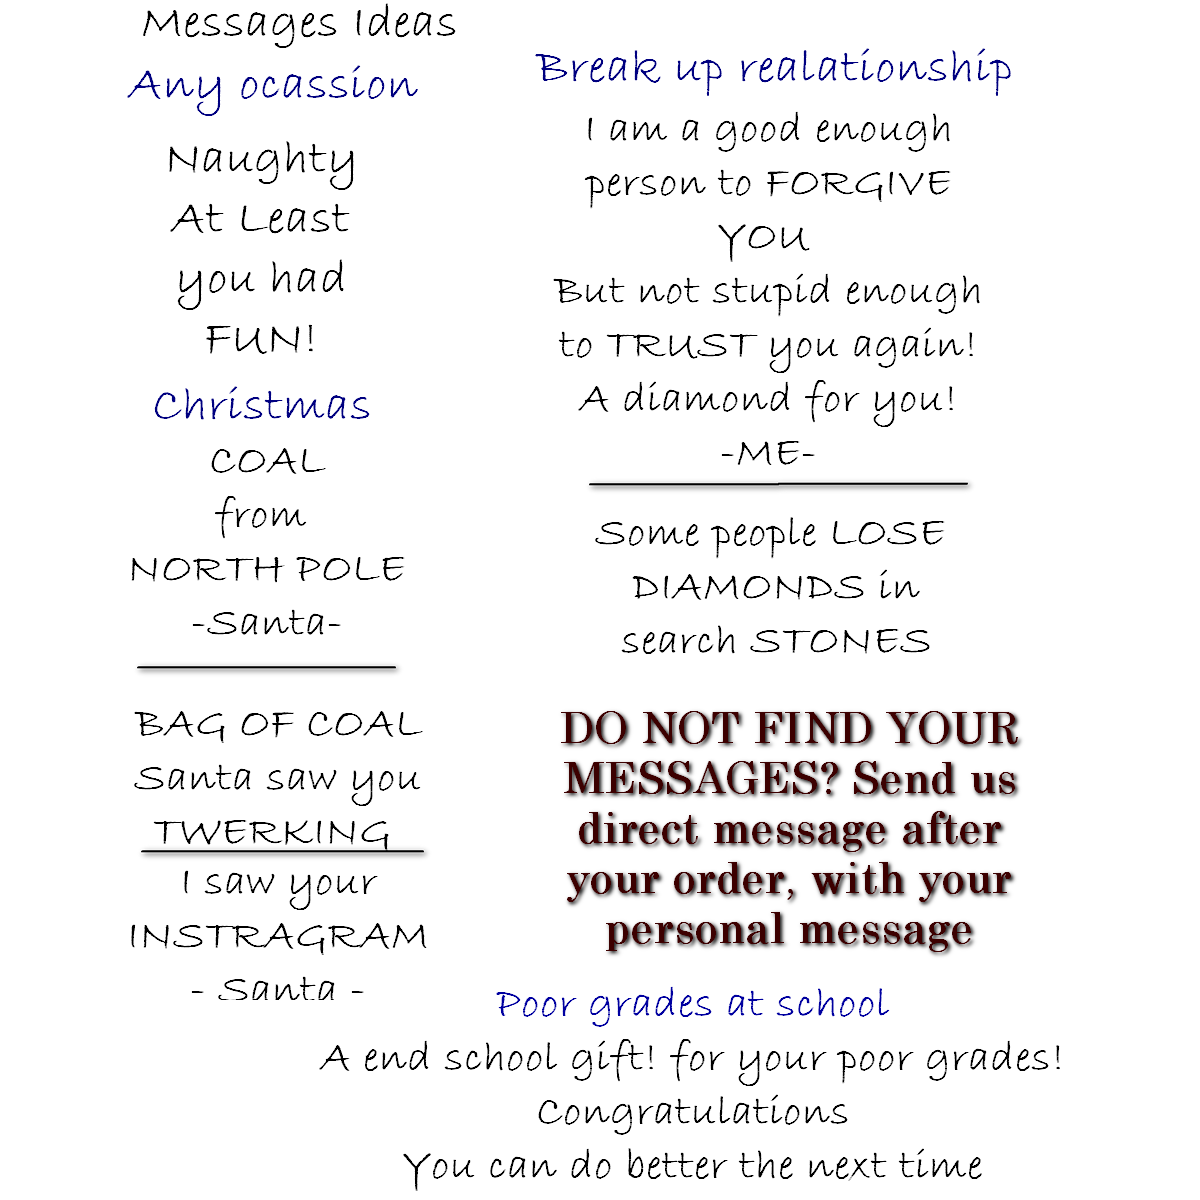 Personalized Coal bag Gift Naughty or Nasty People, Poor grades , Breakup relationship, birthday jokes. - UproMax